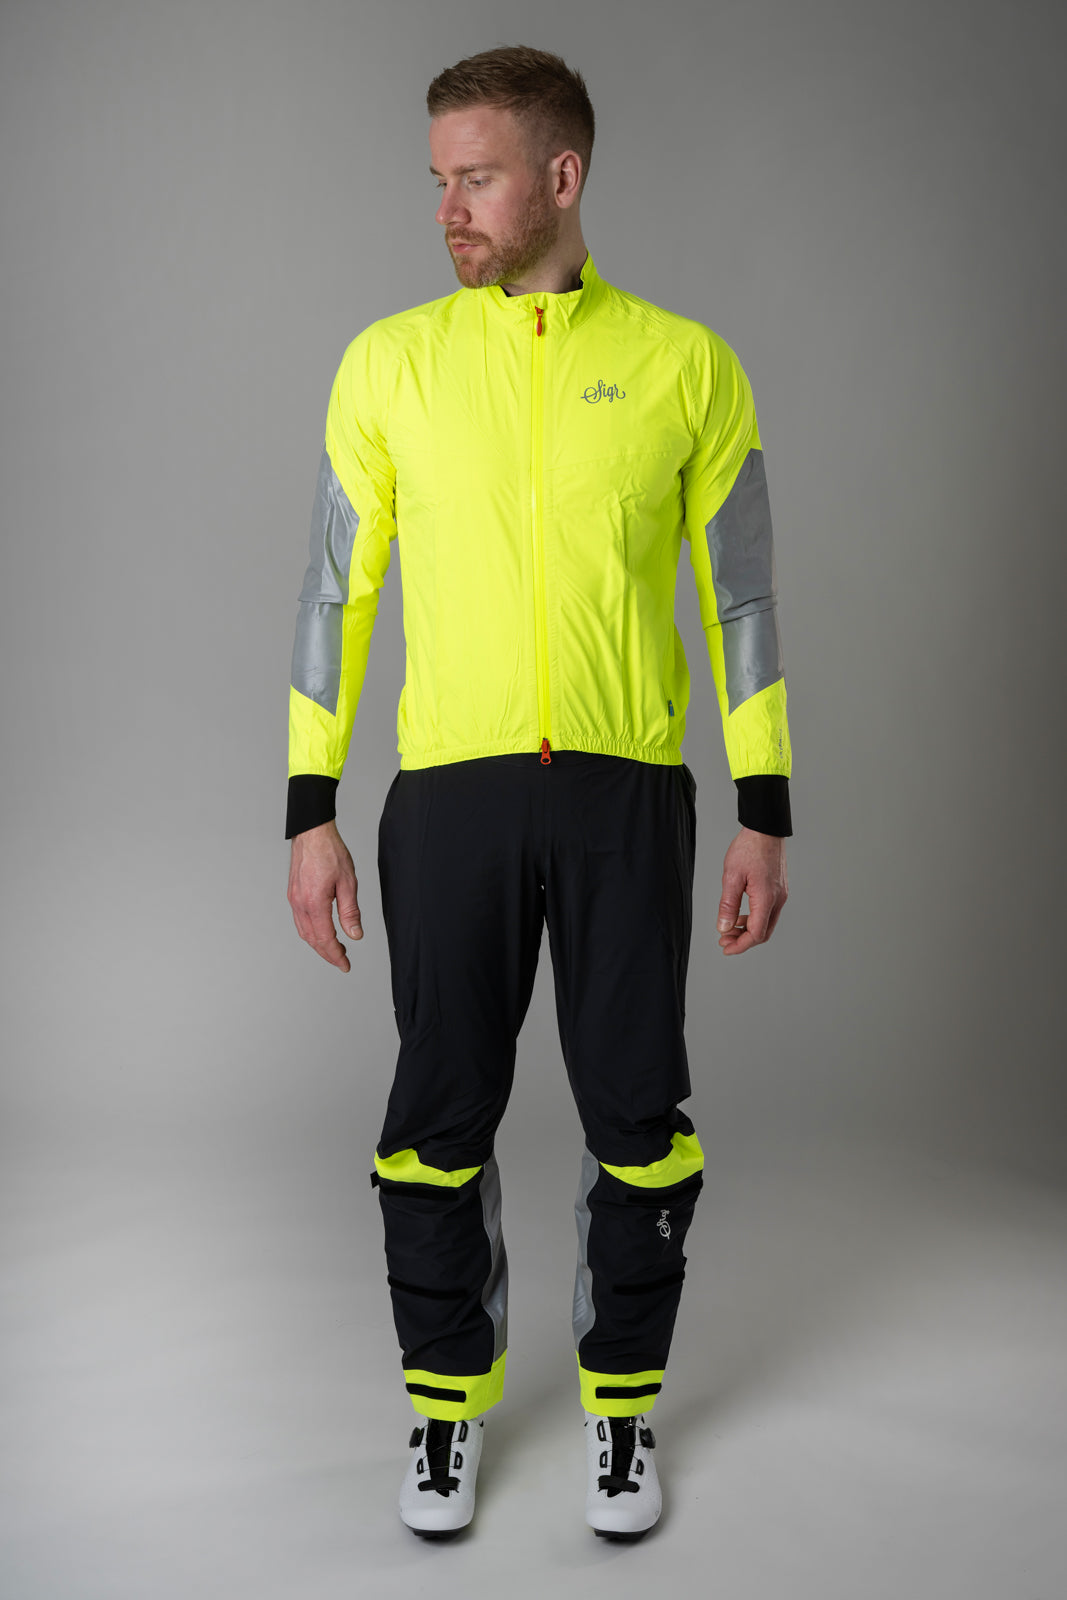 Ostkusten Biomotion Ultraviz Road Cycling Rain Trousers for Men and Women